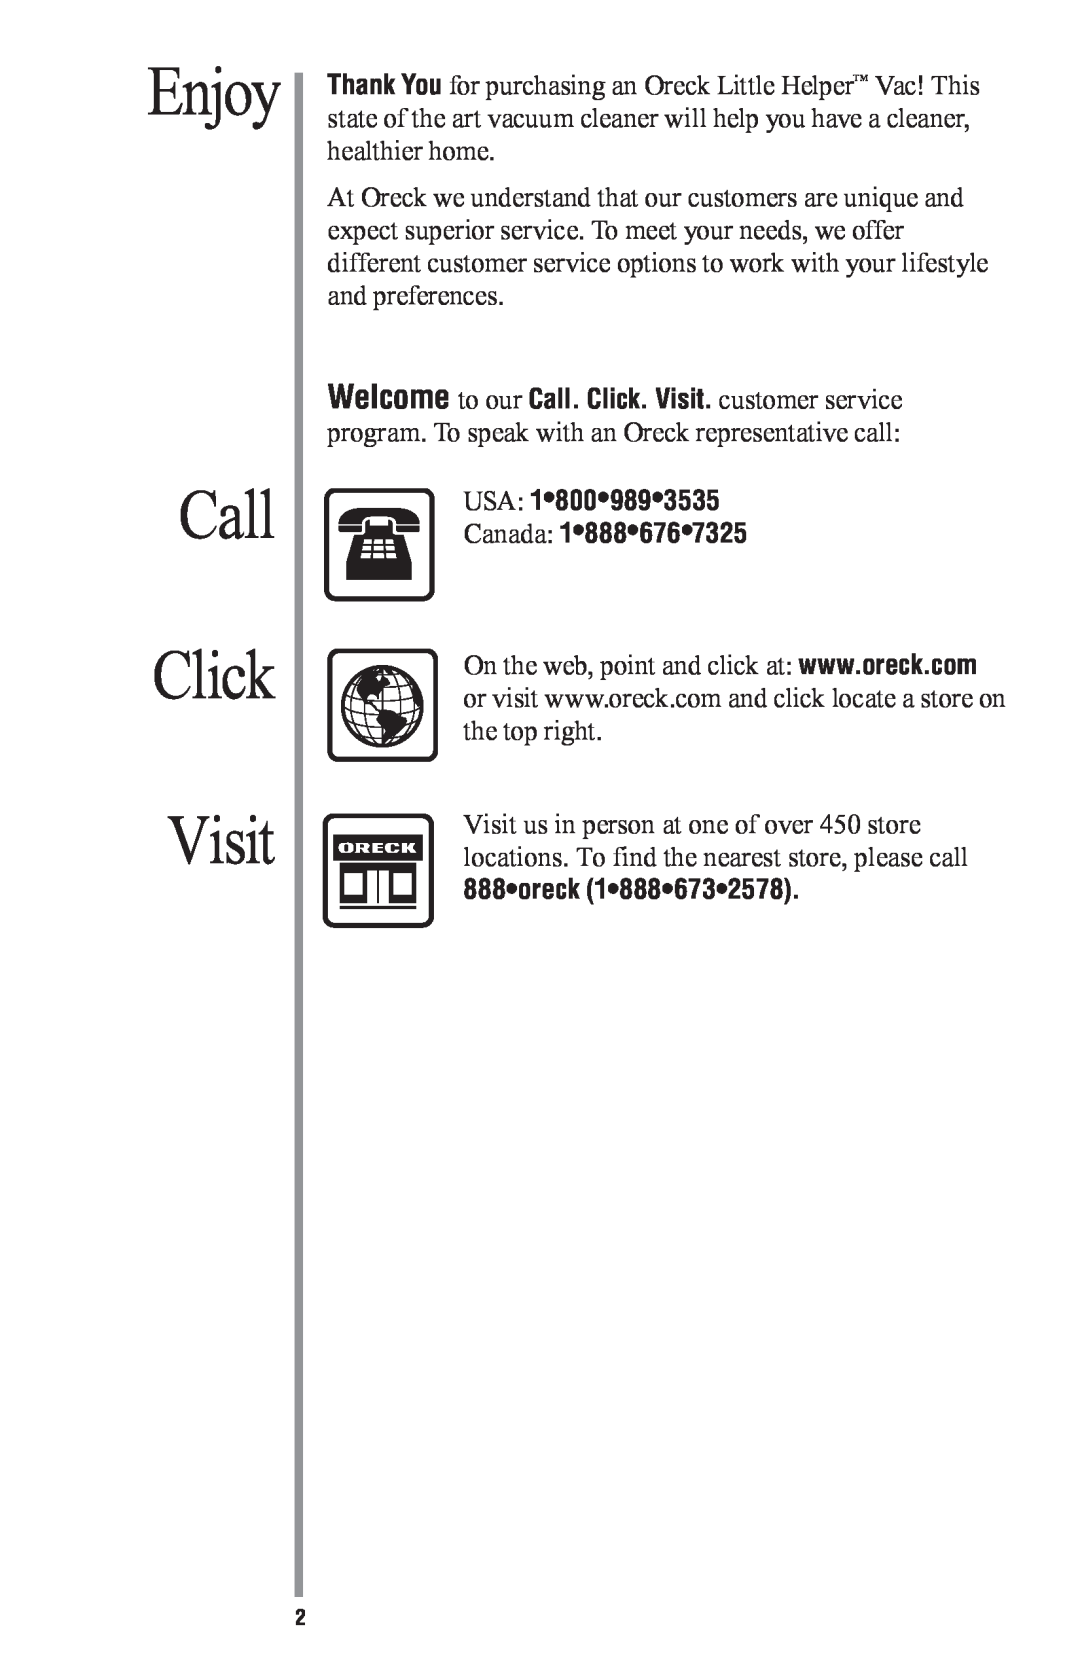 Oreck CC1000 manual Enjoy Call Click Visit, USA 18009893535 Canada, 888oreck 